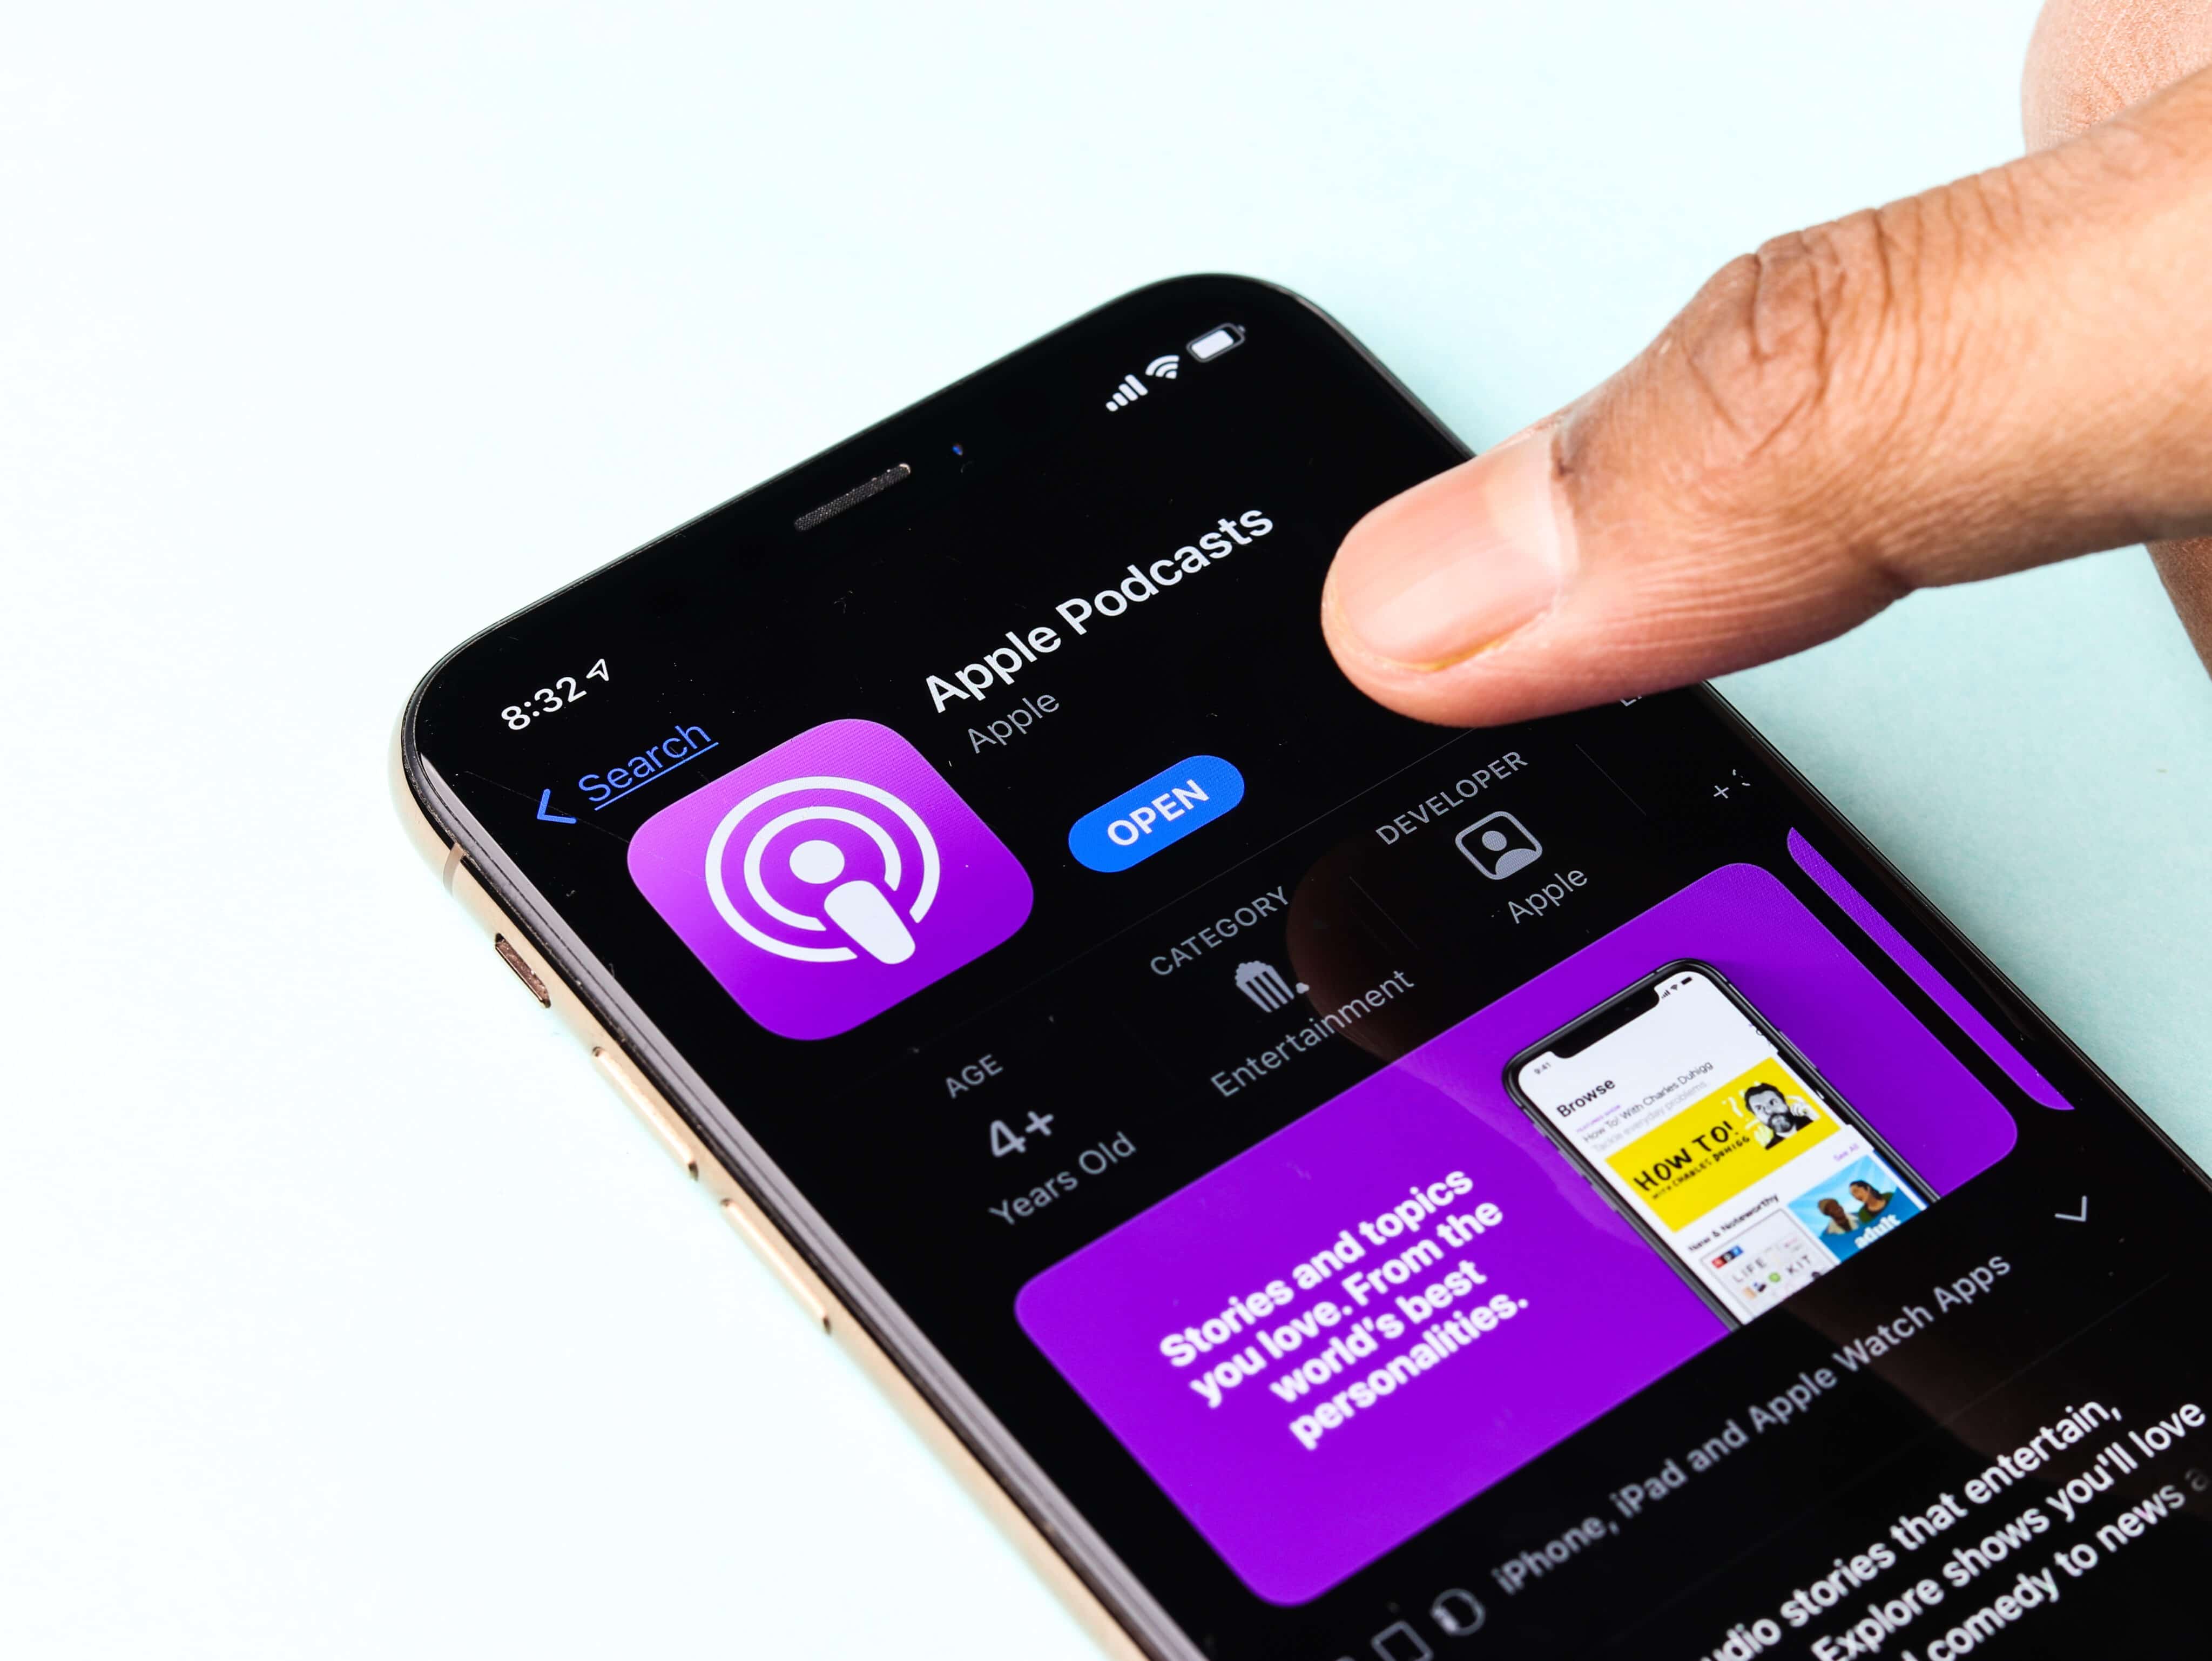 Quadro Externo on Apple Podcasts